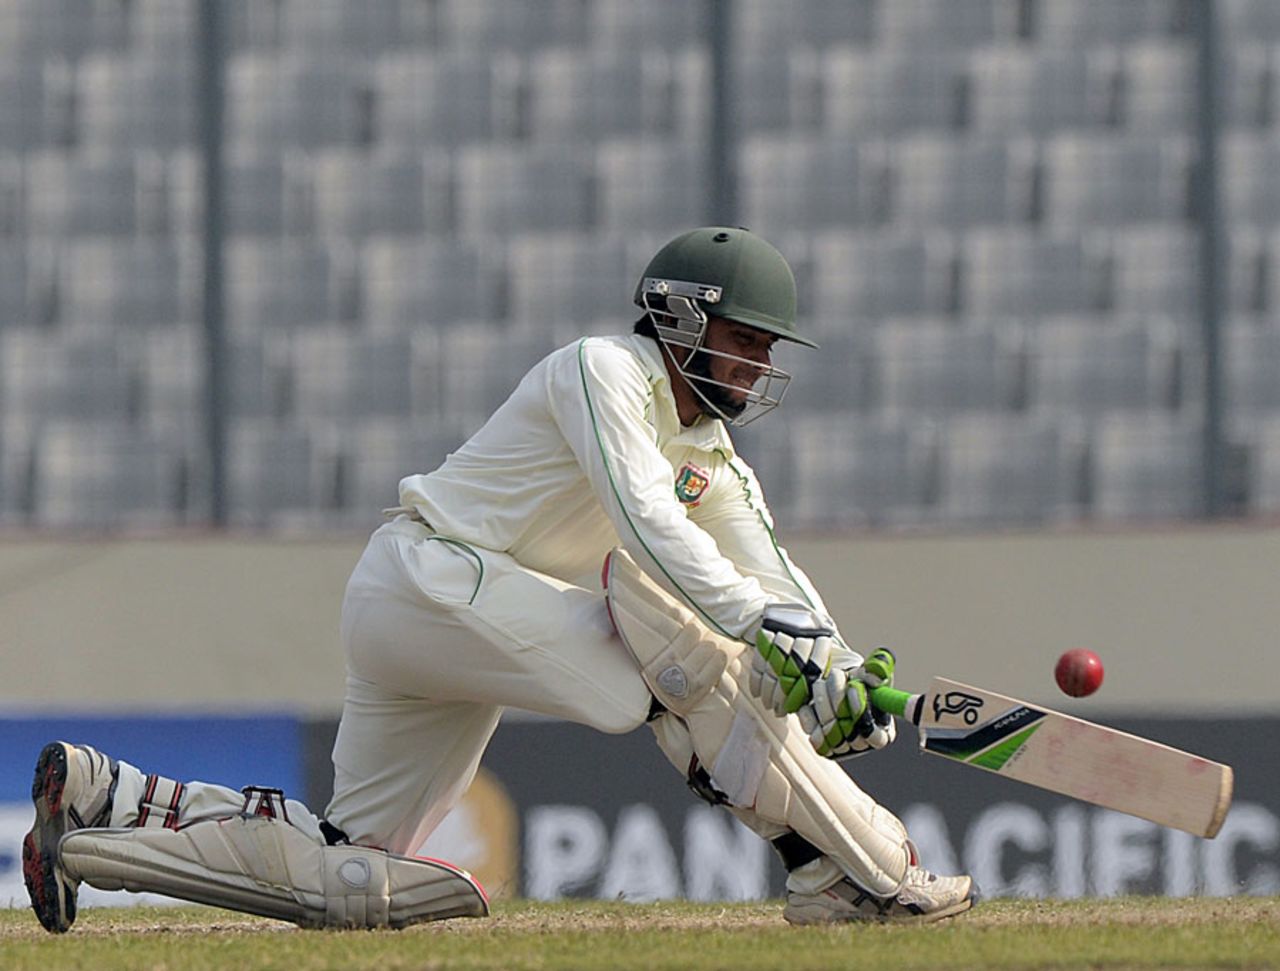 Mominul Haque sweeps during his half-century, Bangladesh v Sri Lanka, 1st Test, Mirpur, 4th day, January 30, 2014